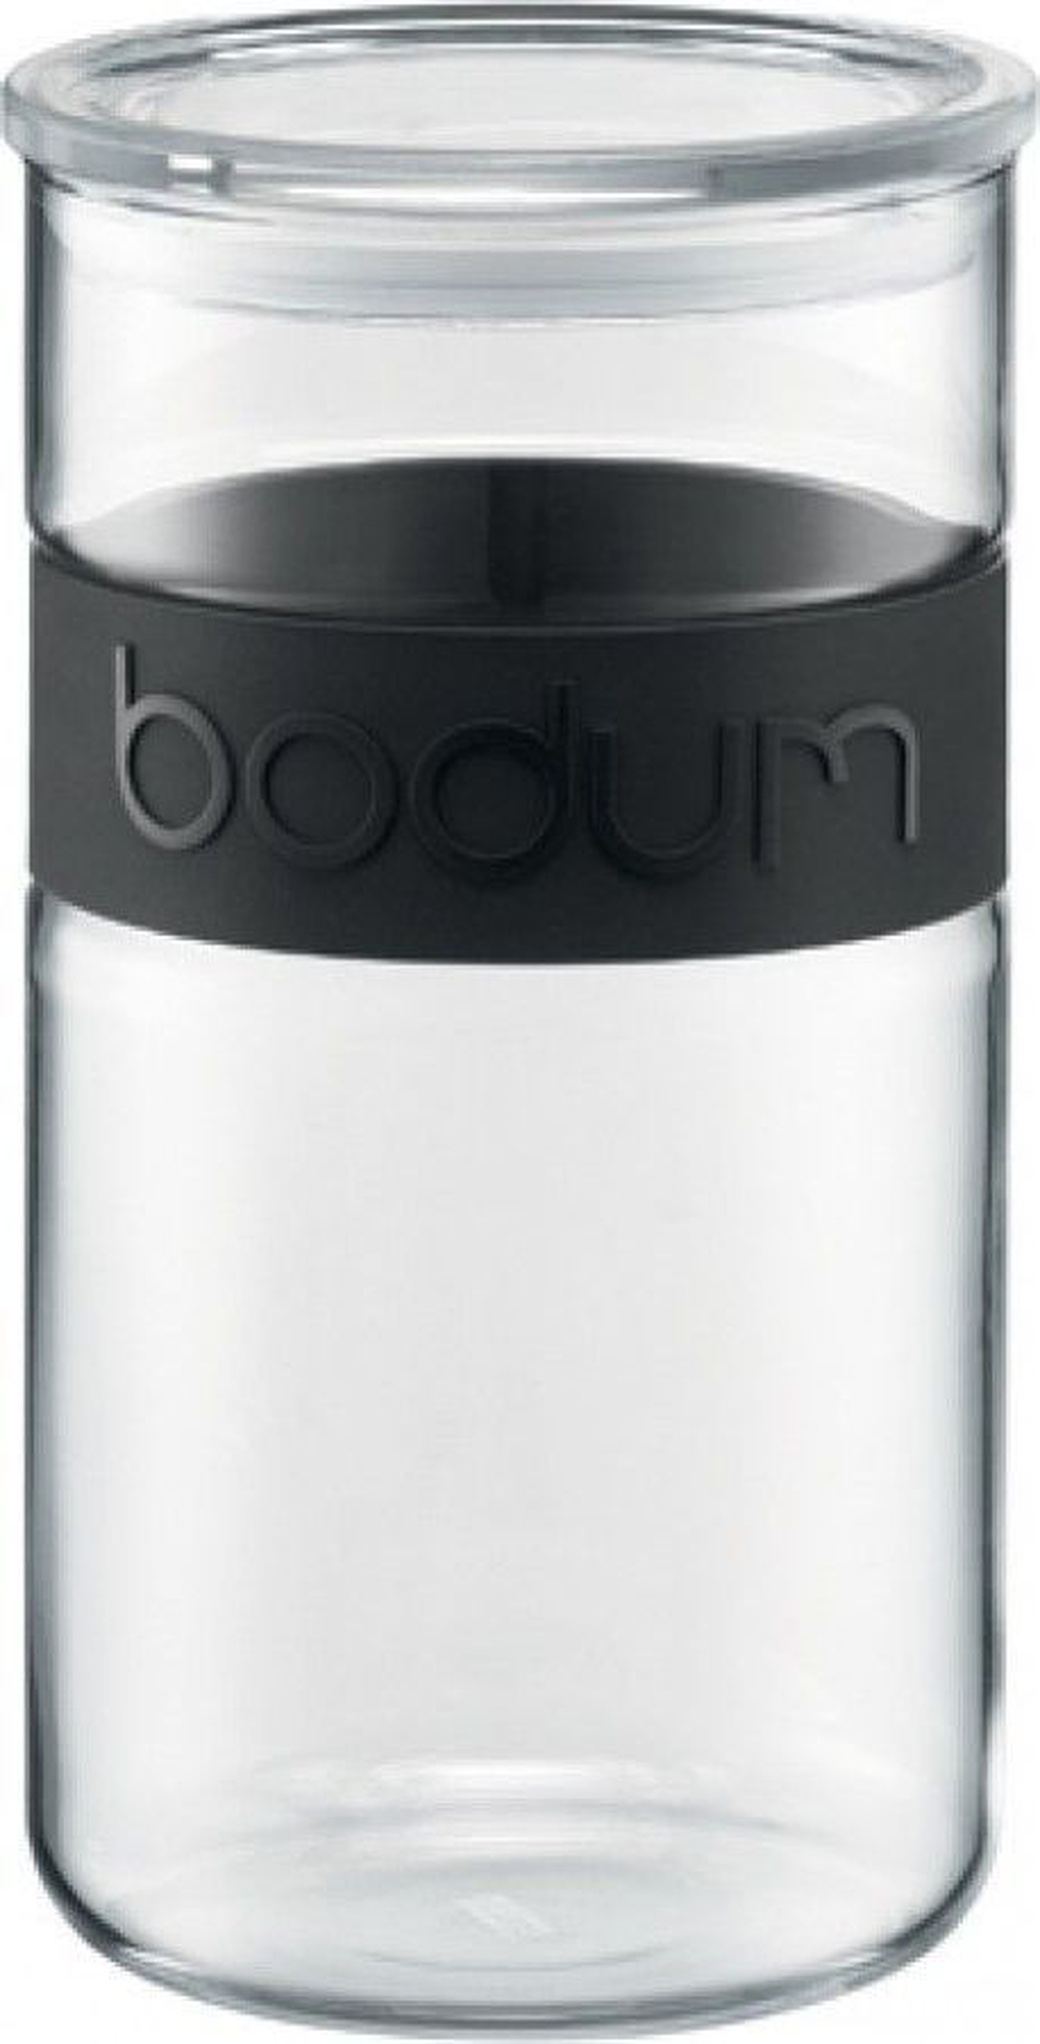 Банка для хранения Bodum Presso (2 литра), черная, 11130-01 фото